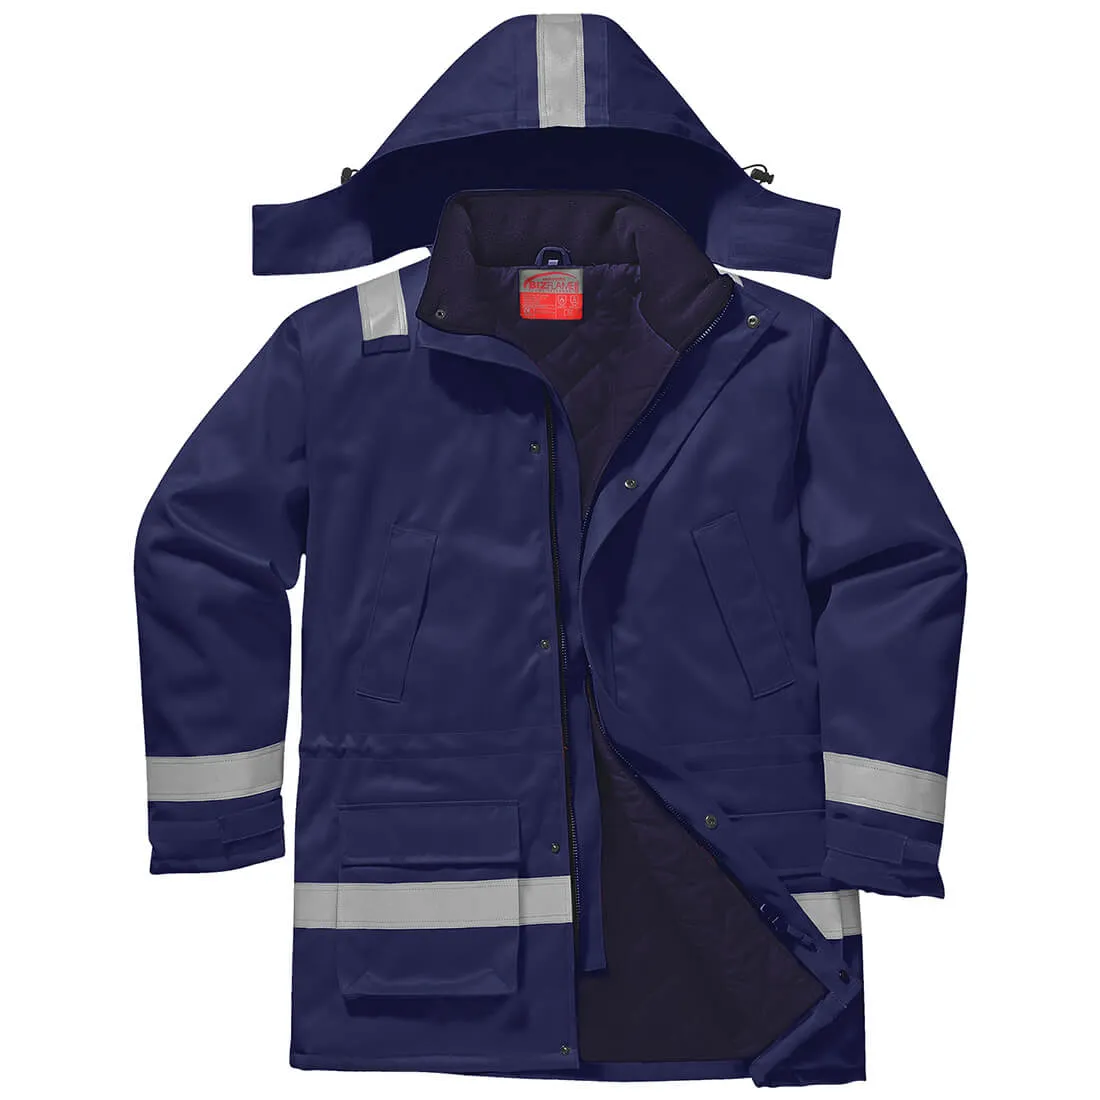 Biz Flame Mens Flame Resistant Antistatic Winter Jacket - Navy, XL